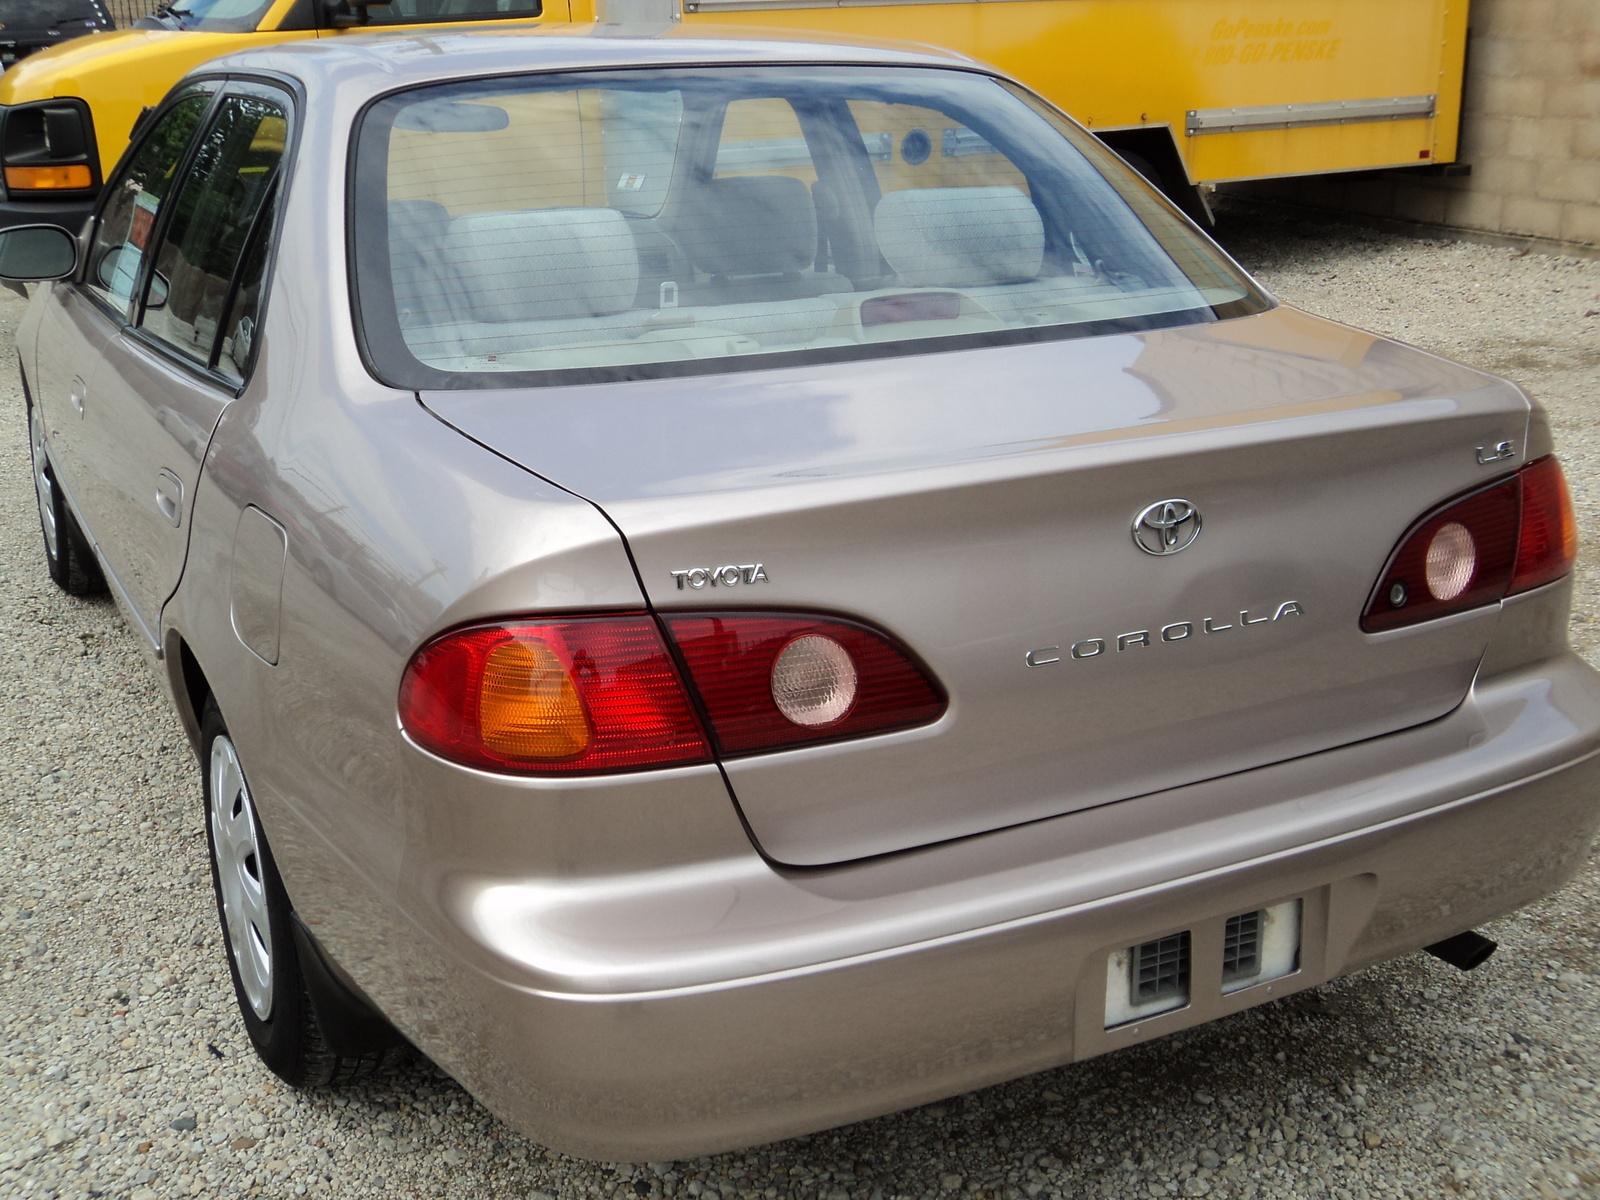 2001 Toyota corolla consumer review